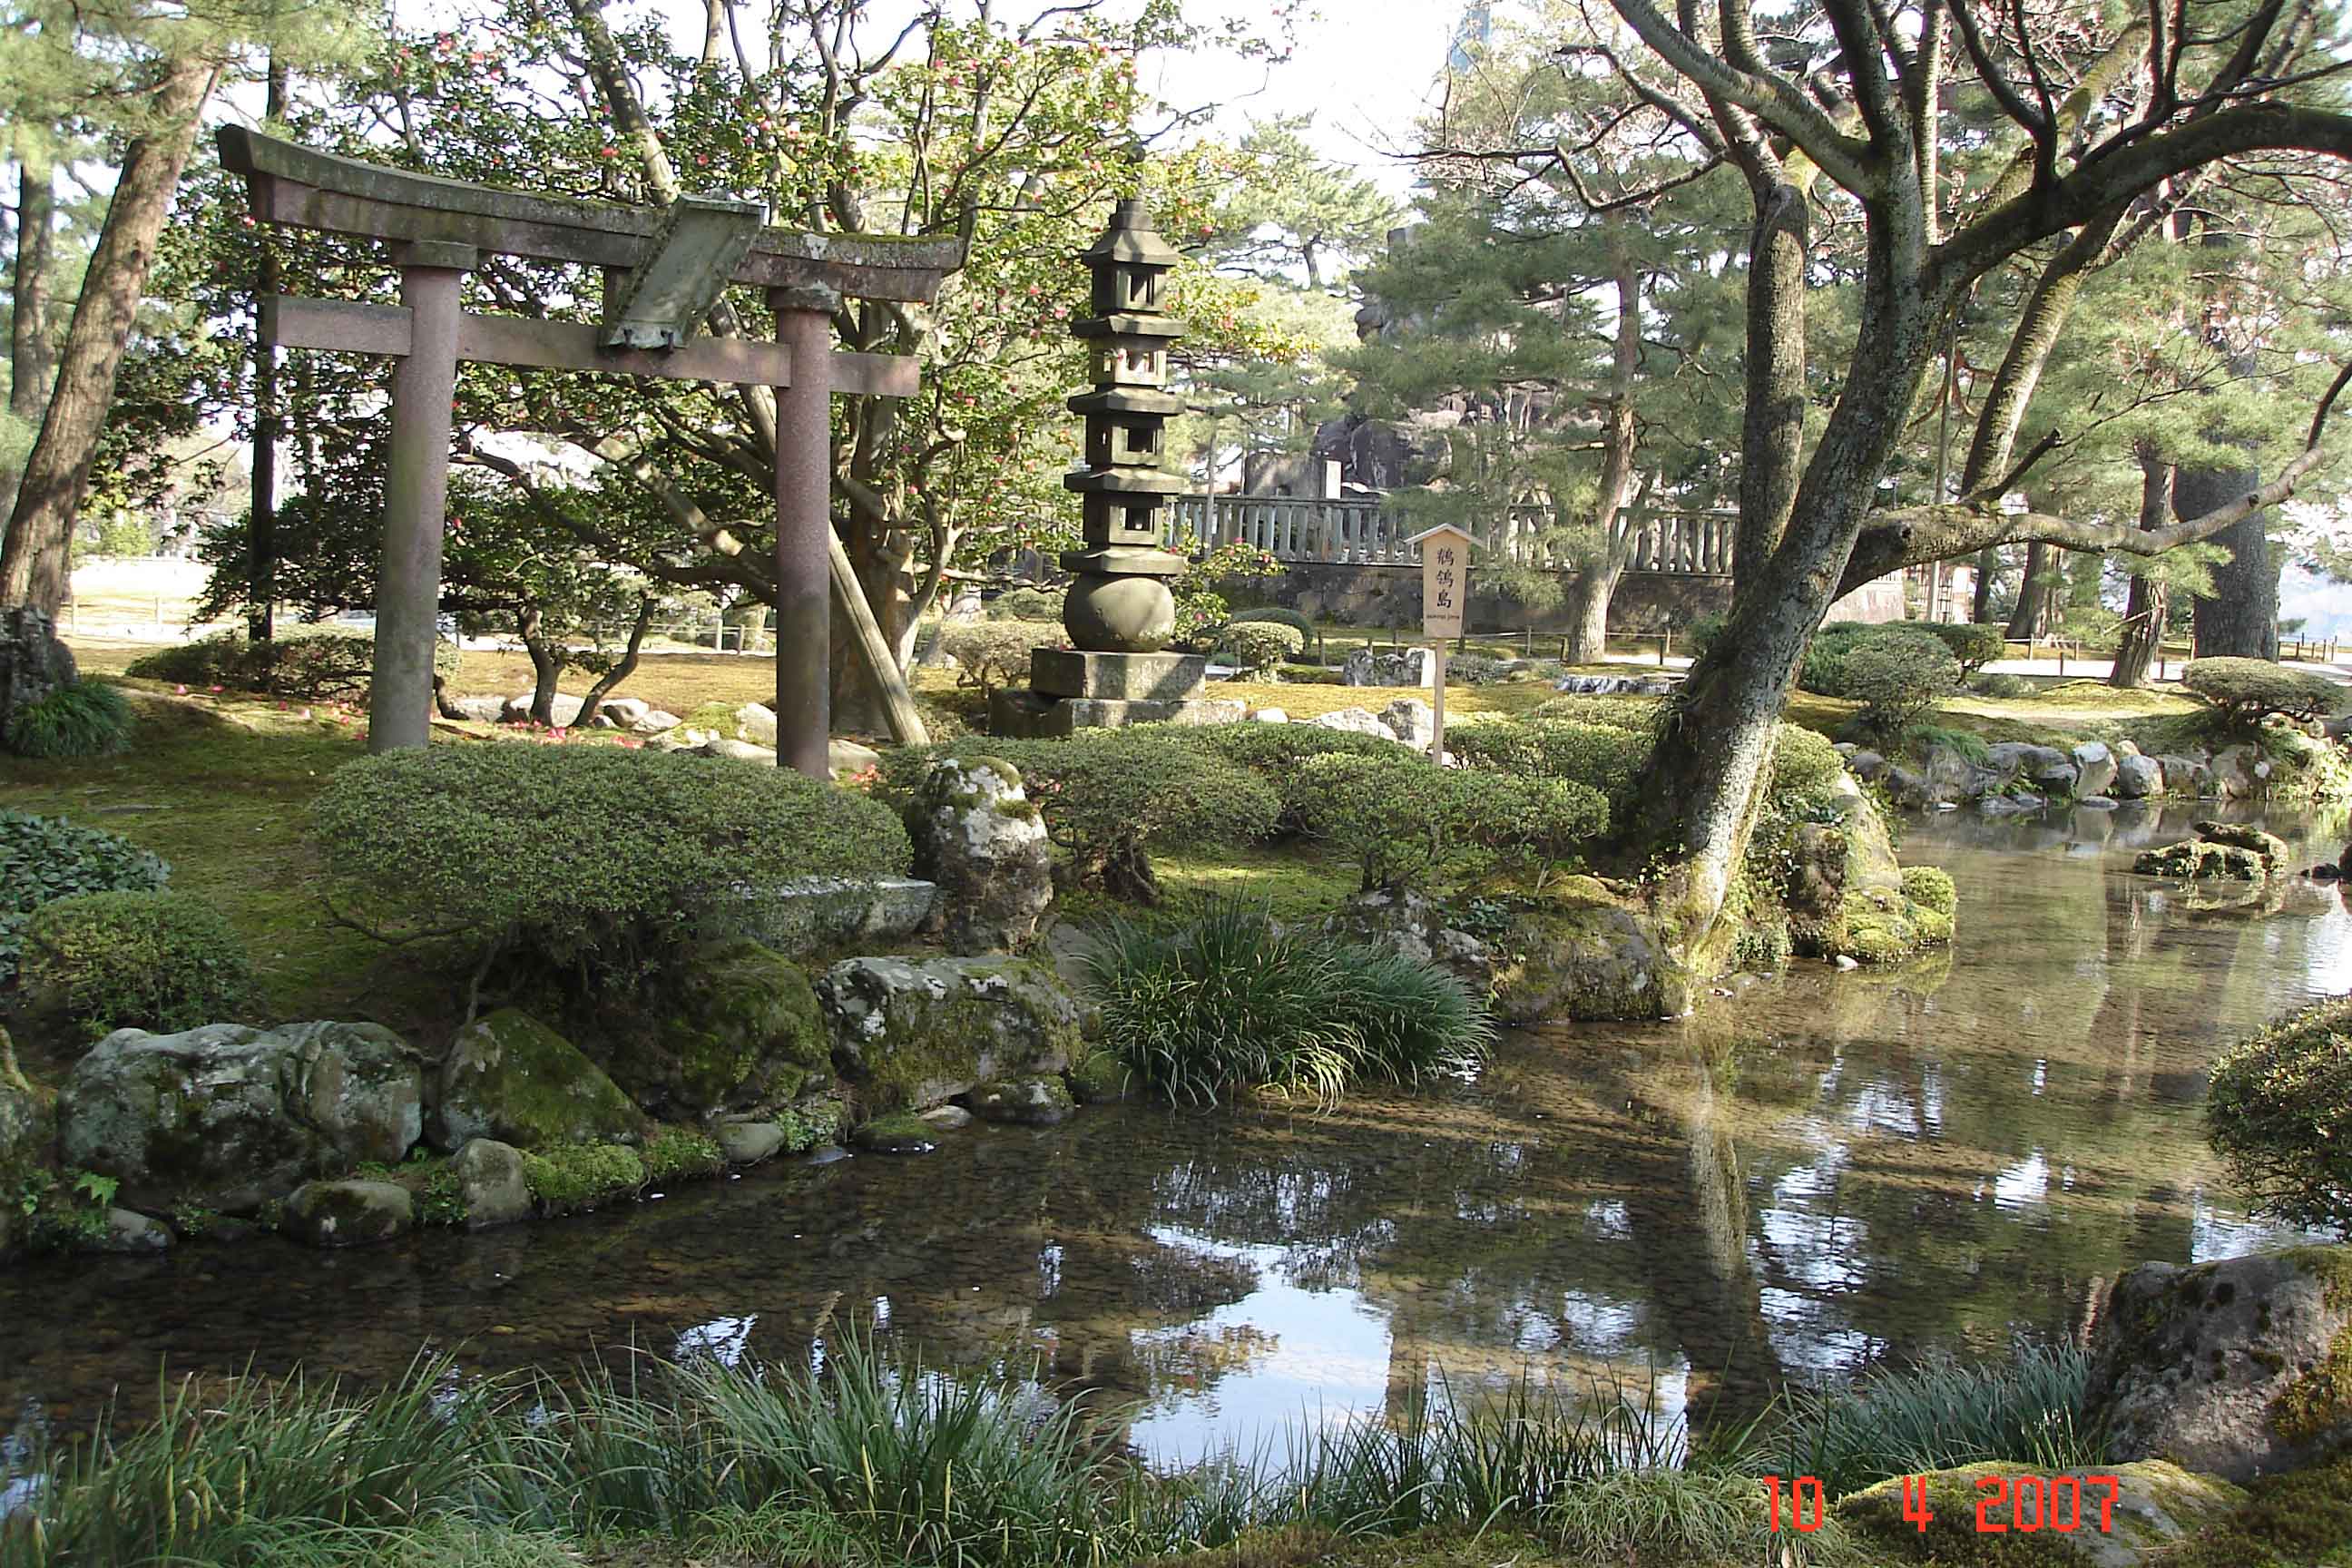 Kenroku-en Garden-Park - ancient stone Torii Gate and Lantern